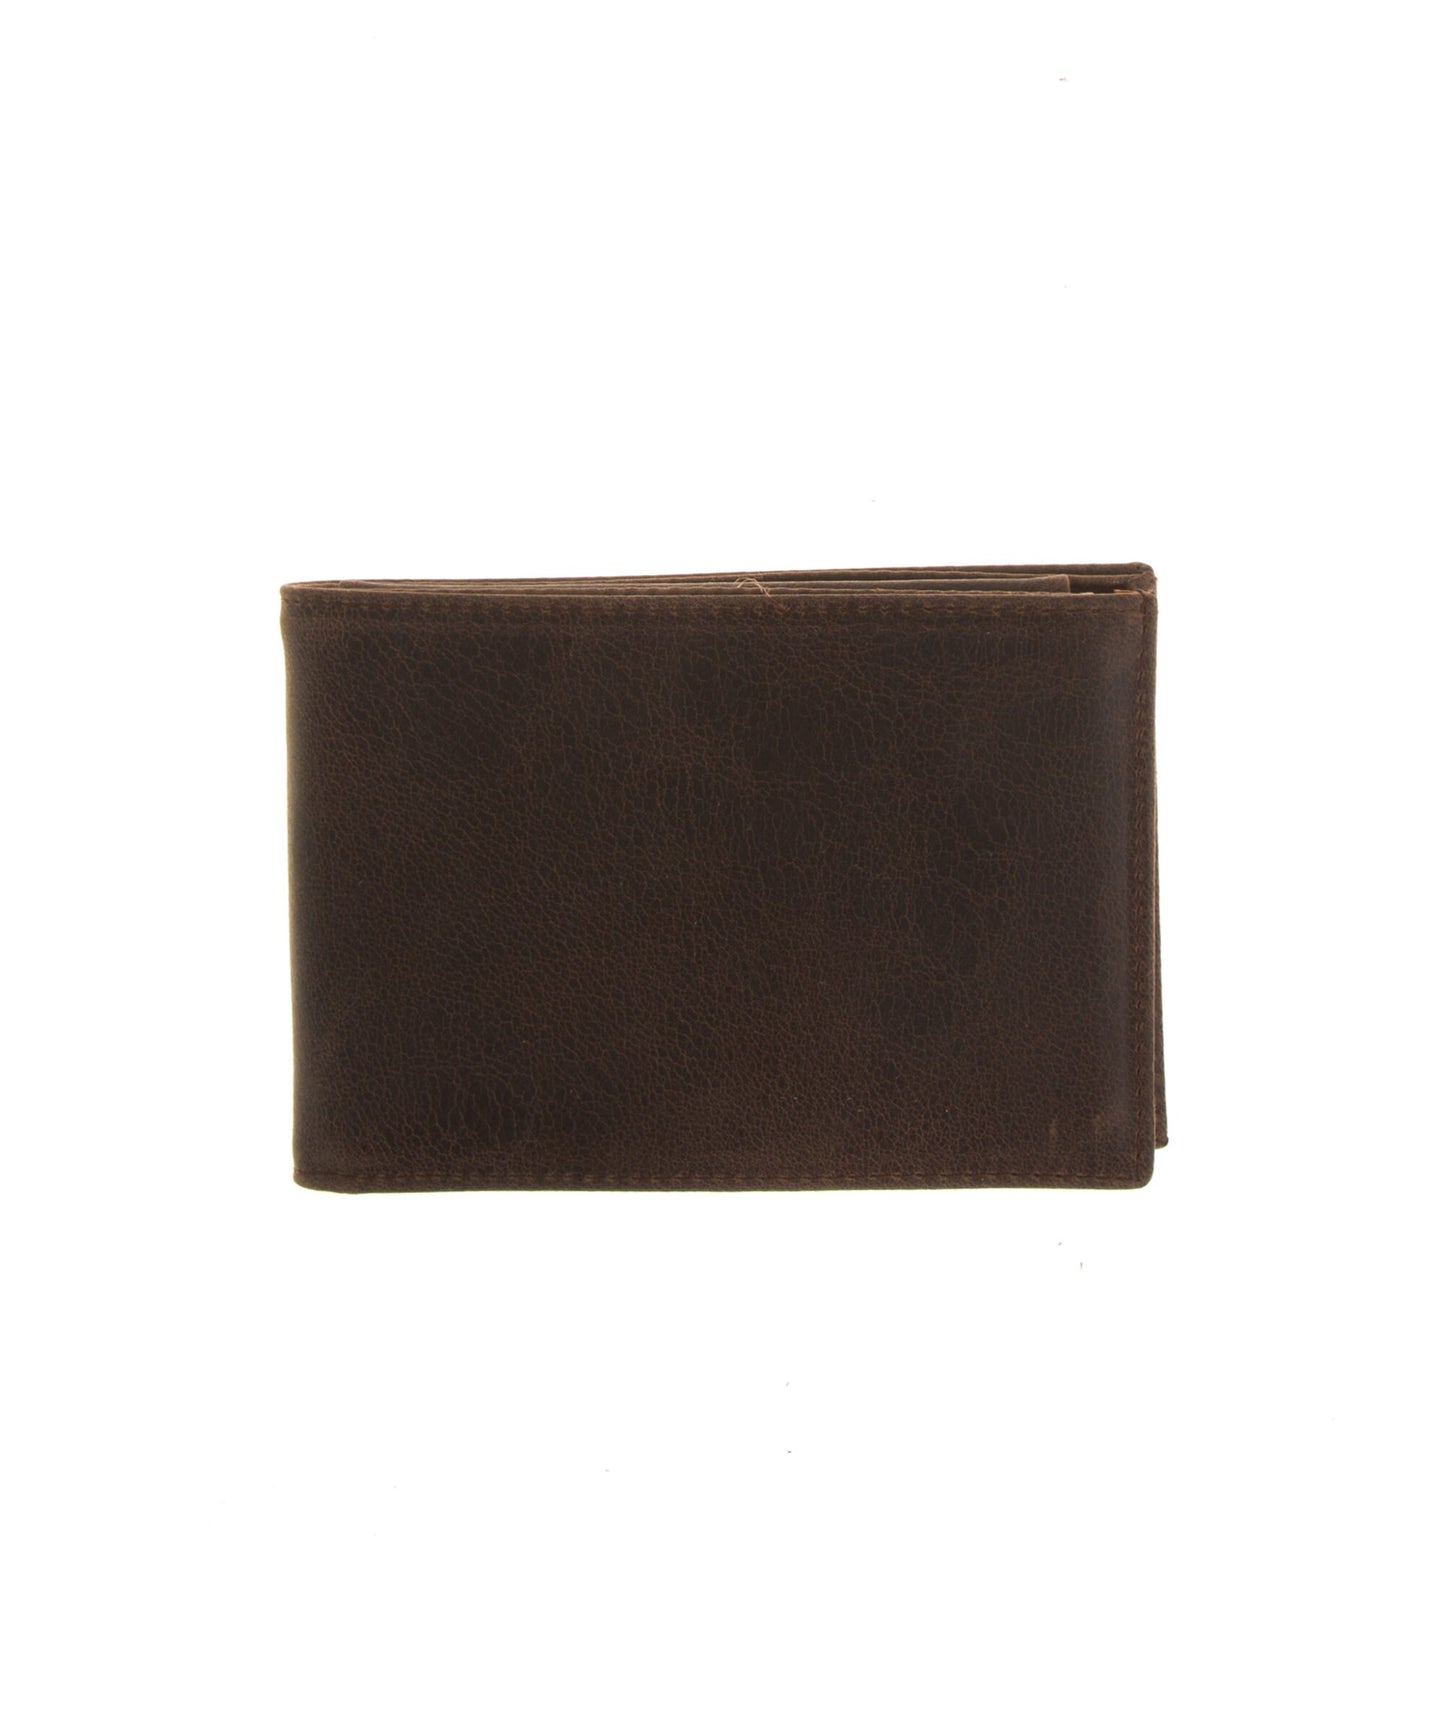 Leather wallet mens handmade, Minimalist leather wallet, Leather trifold wallet natural color, Full grain leather wallet